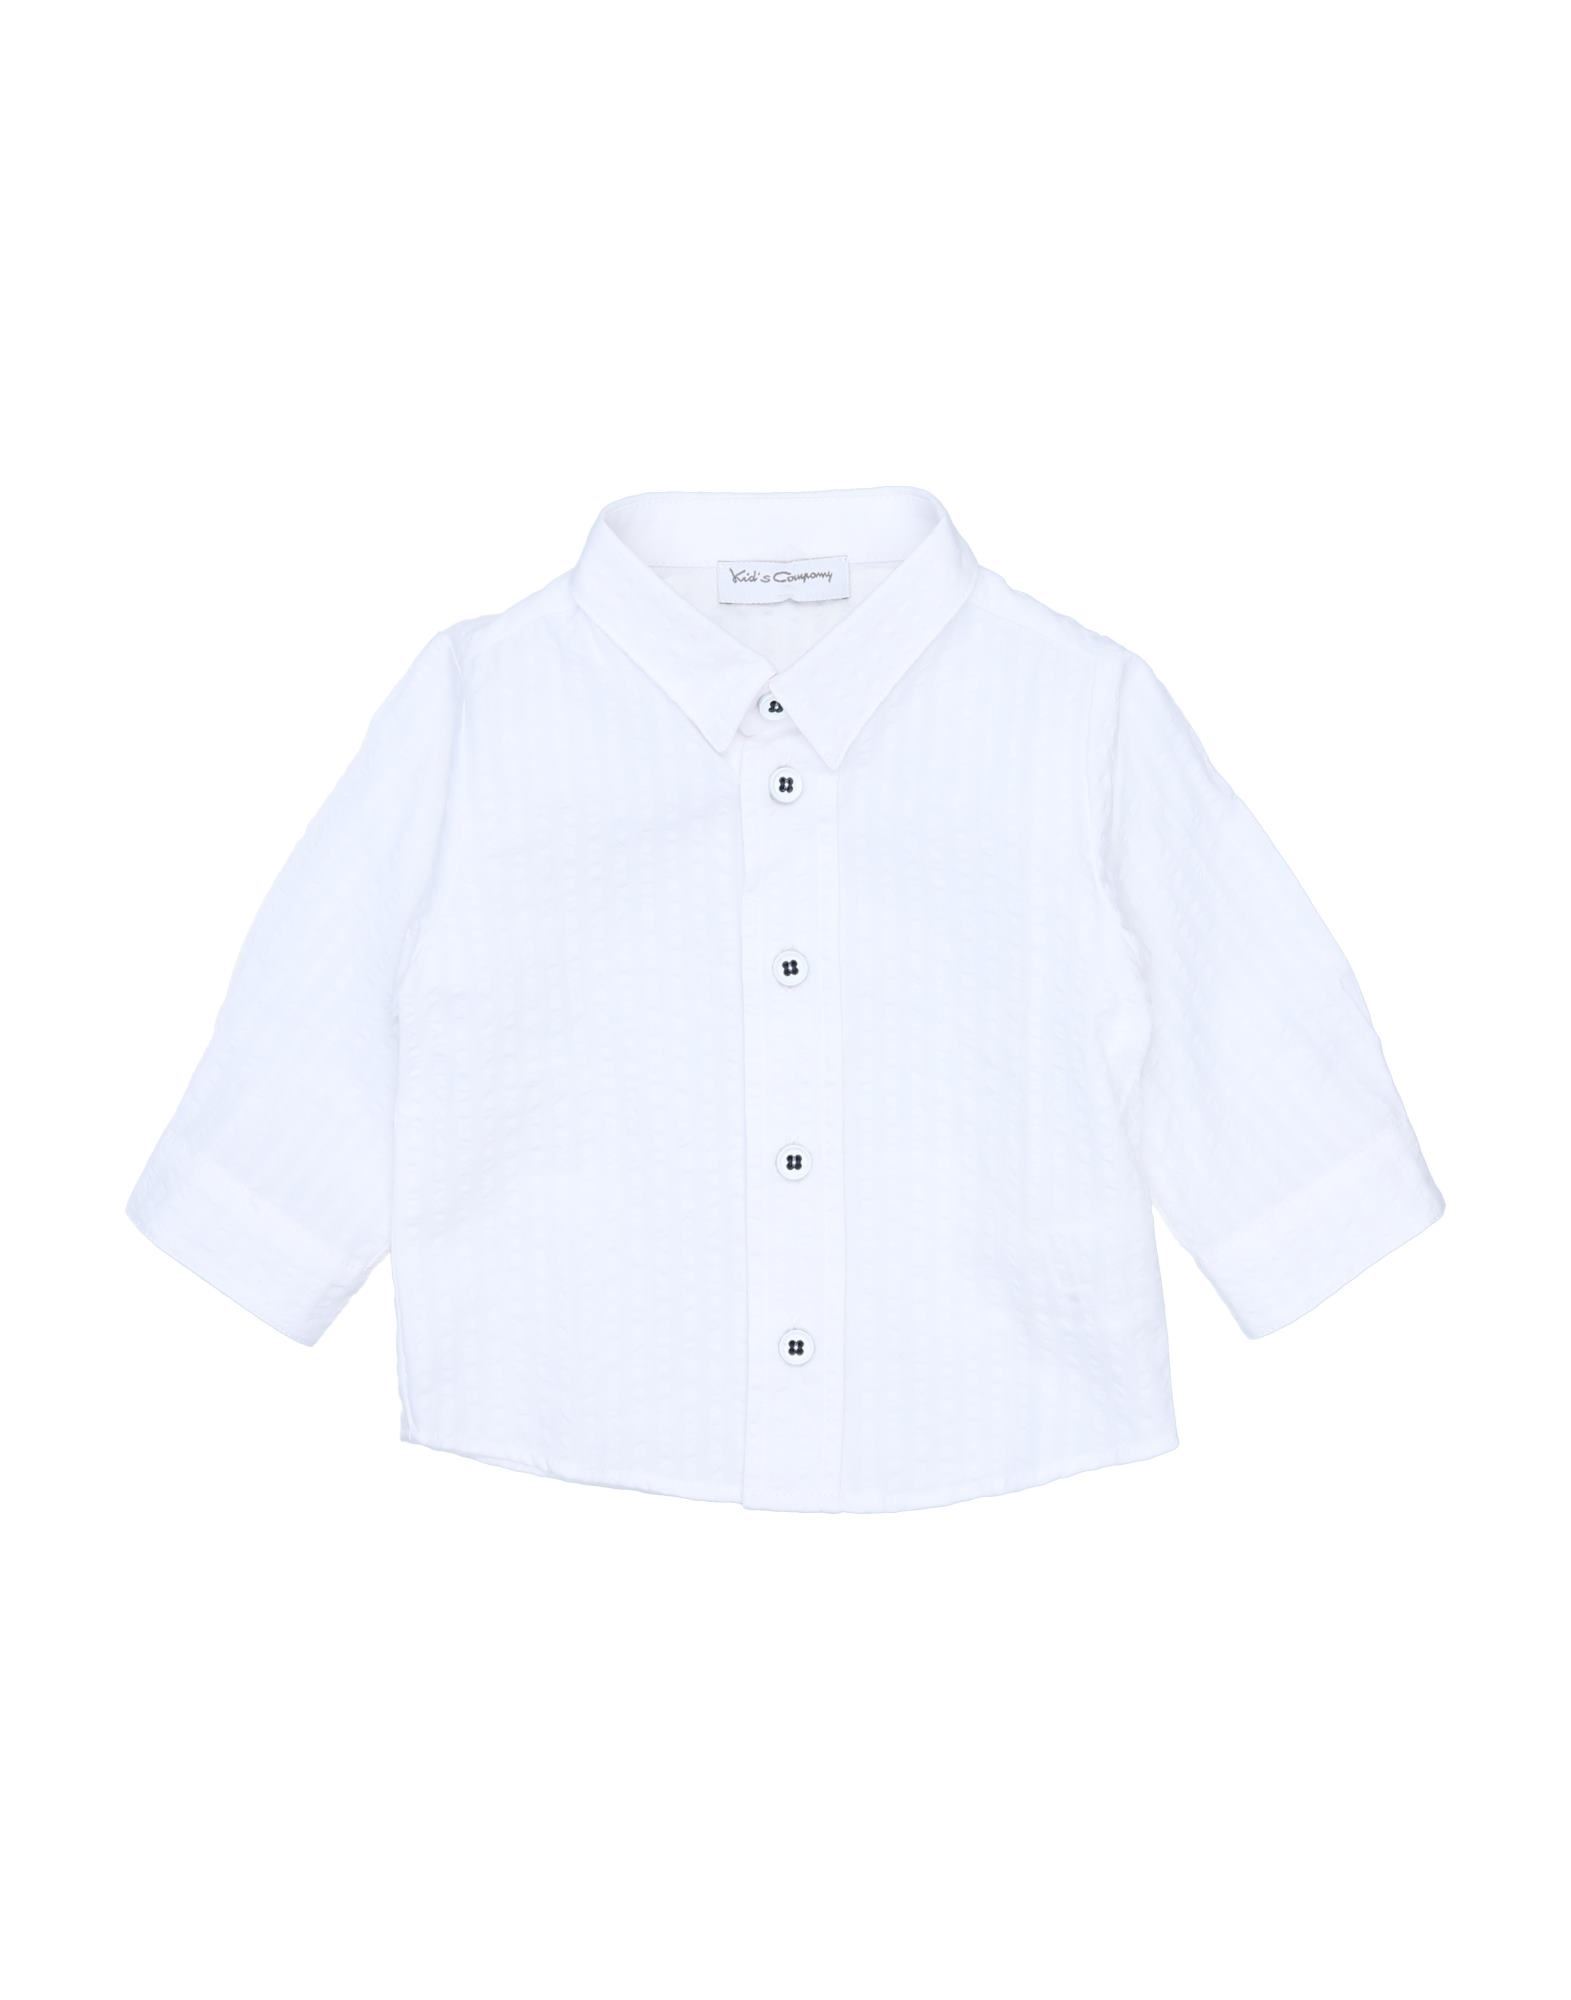 Kid's Company Newborn Boy Shirt White Size 3 Textile Fibers